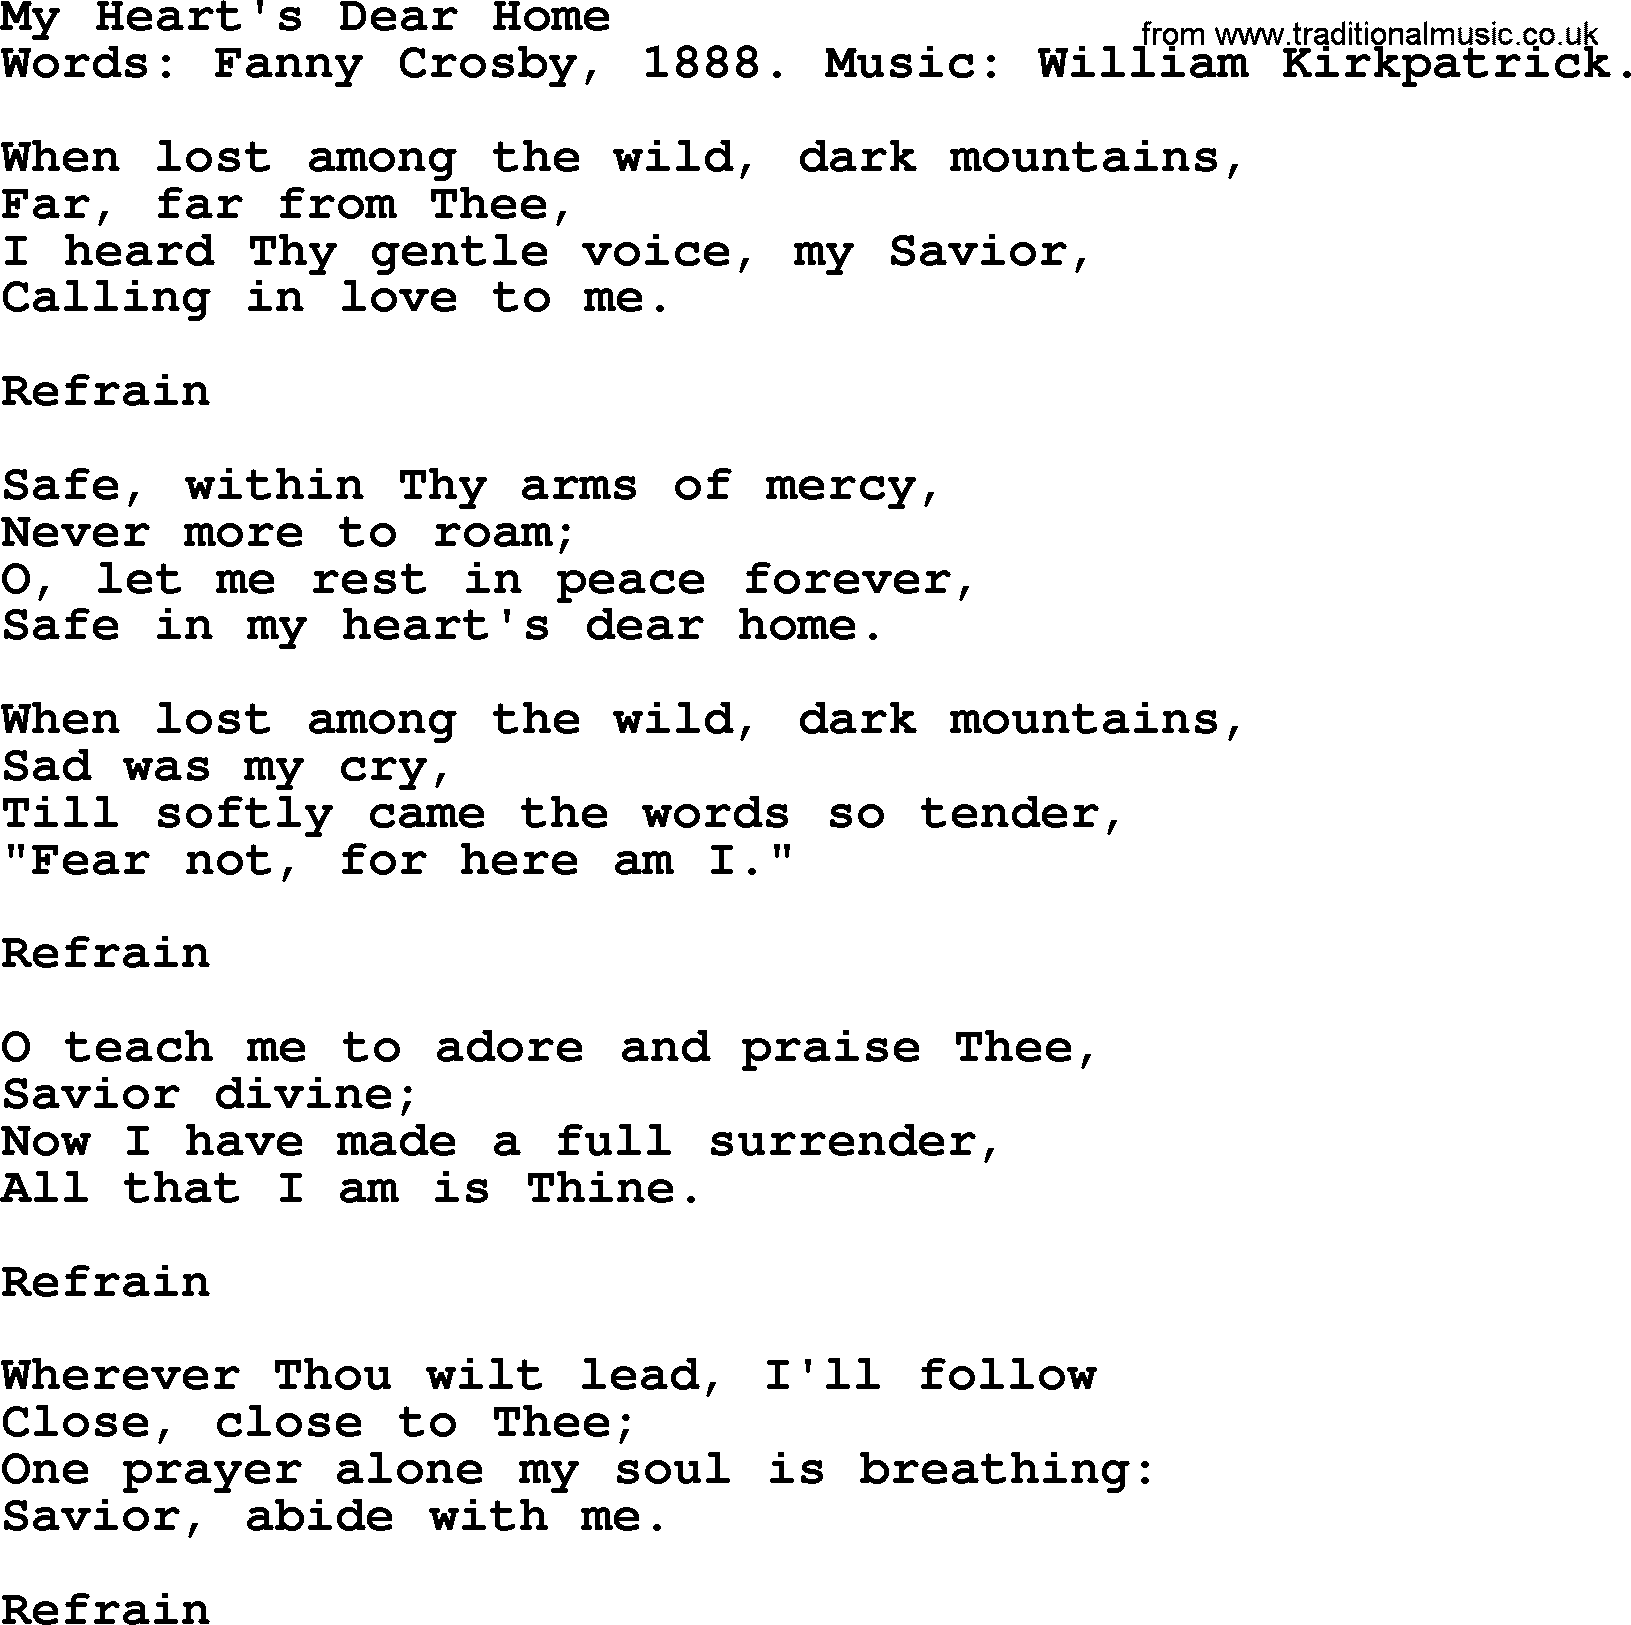 Fanny Crosby song: My Heart's Dear Home, lyrics